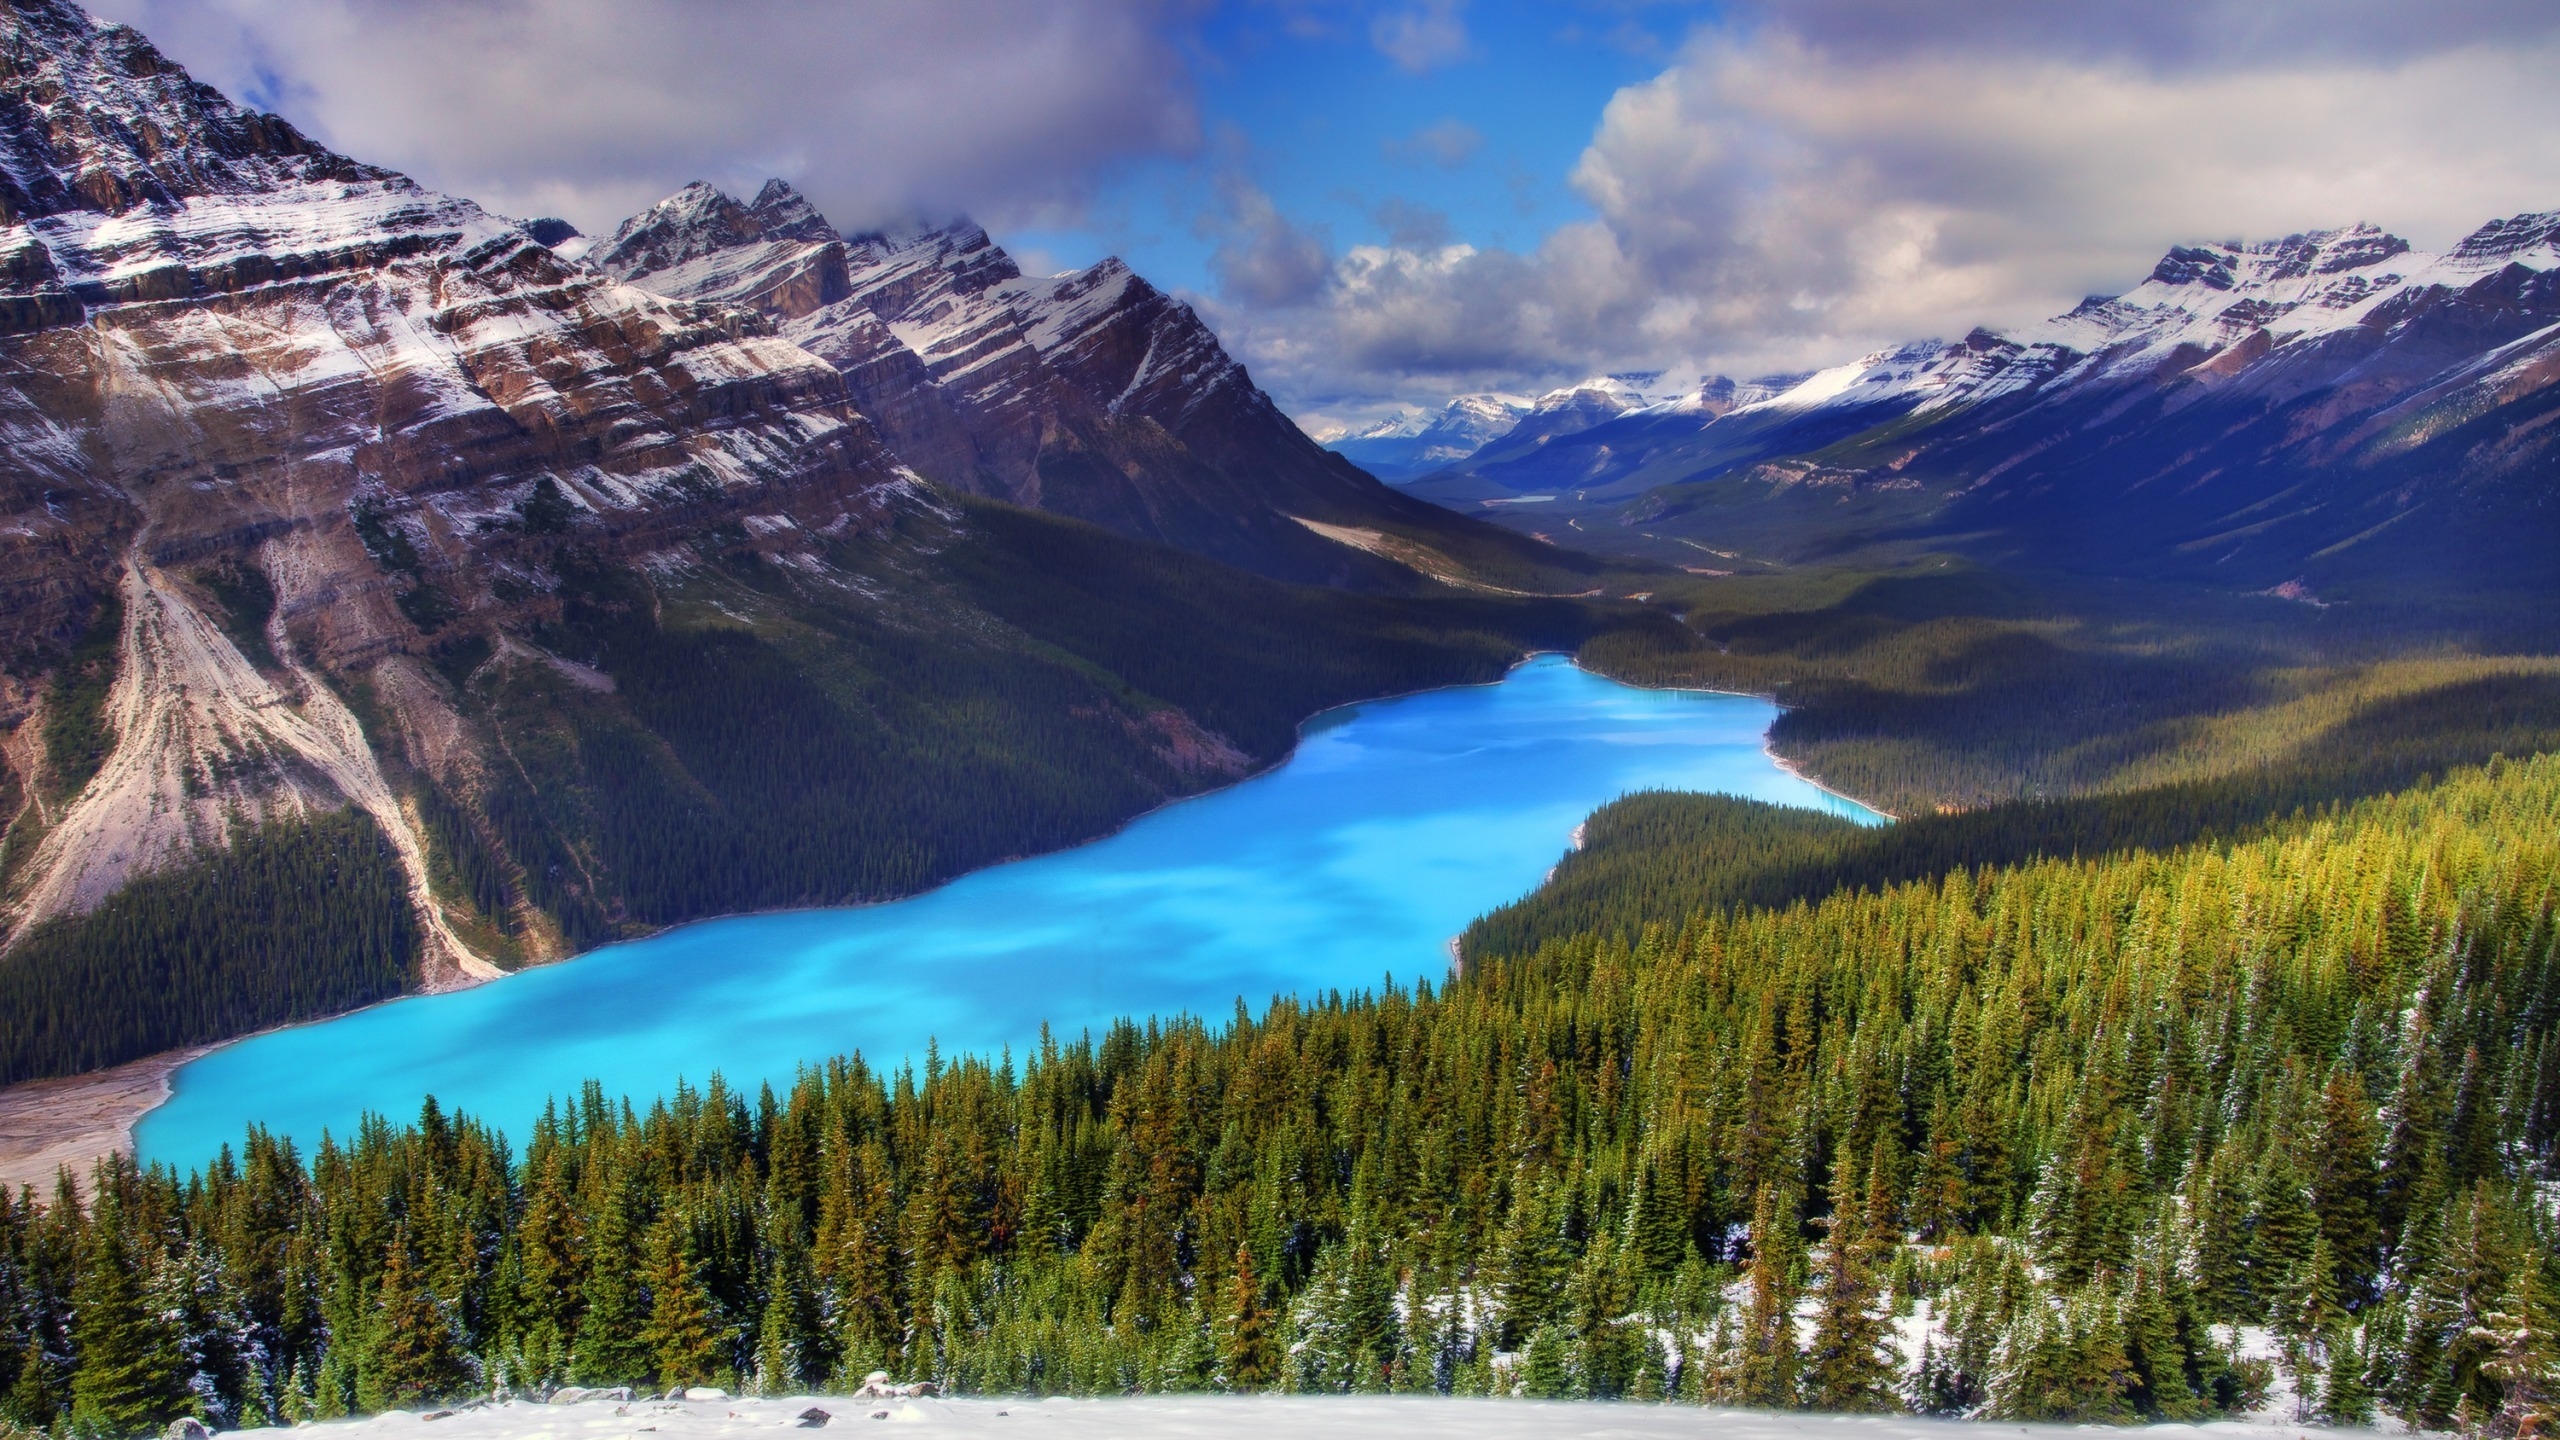 Moraine Lake Canada for 2560x1440 HDTV resolution